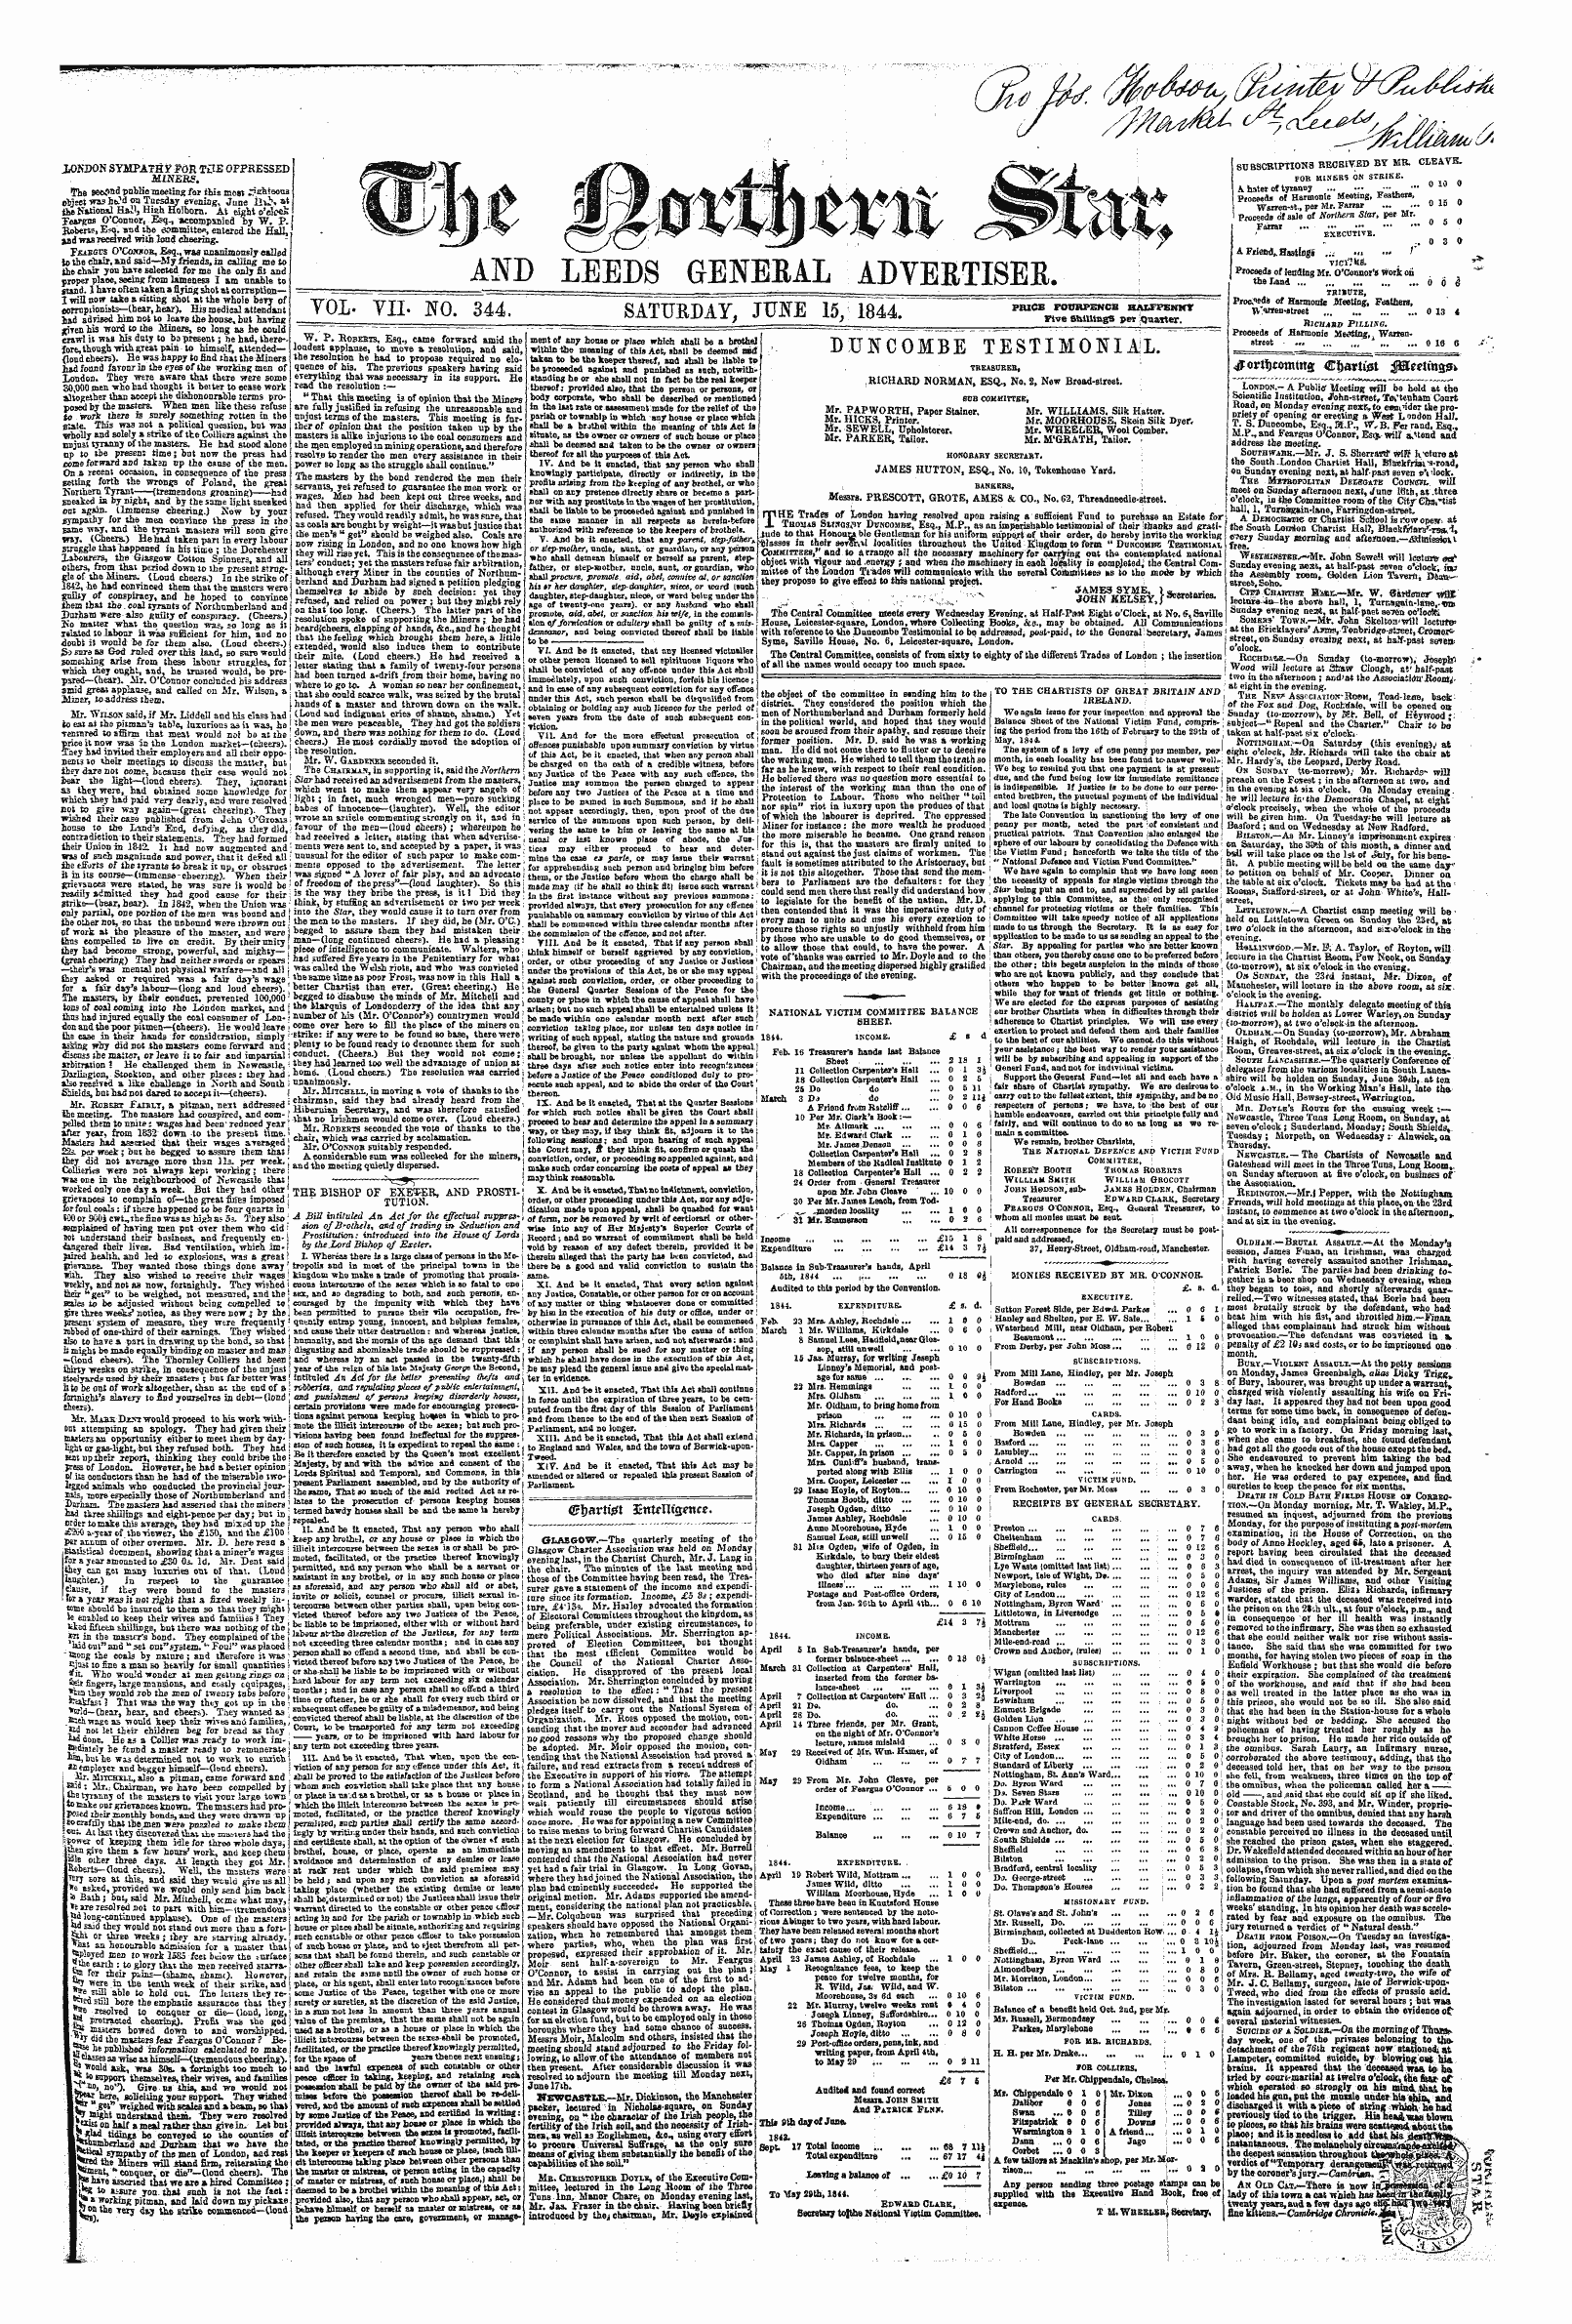 Northern Star (1837-1852): jS F Y, 1st edition - Dunc0mbe Testimonial. Treasdeeb, '. Richard Norman, Esq., No. 2, New Broad-Street.